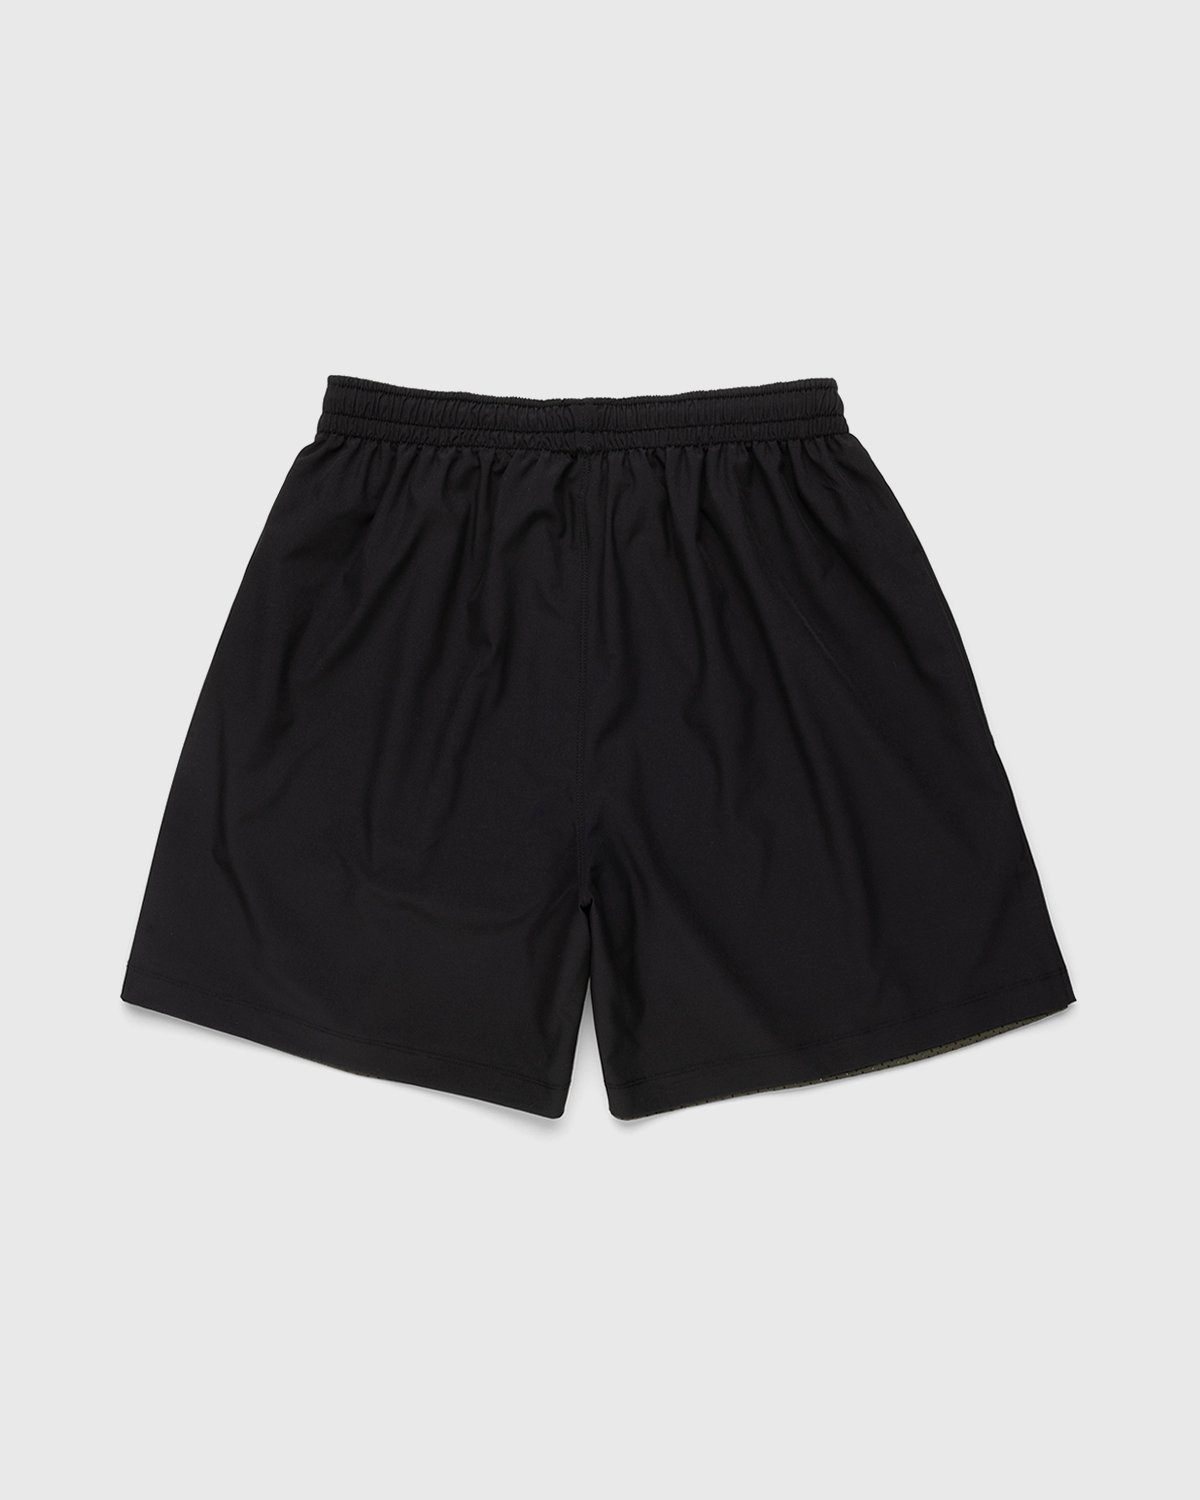 Highsnobiety - HS Sports Reversible Mesh Shorts Black/Khaki - Clothing - Green - Image 4